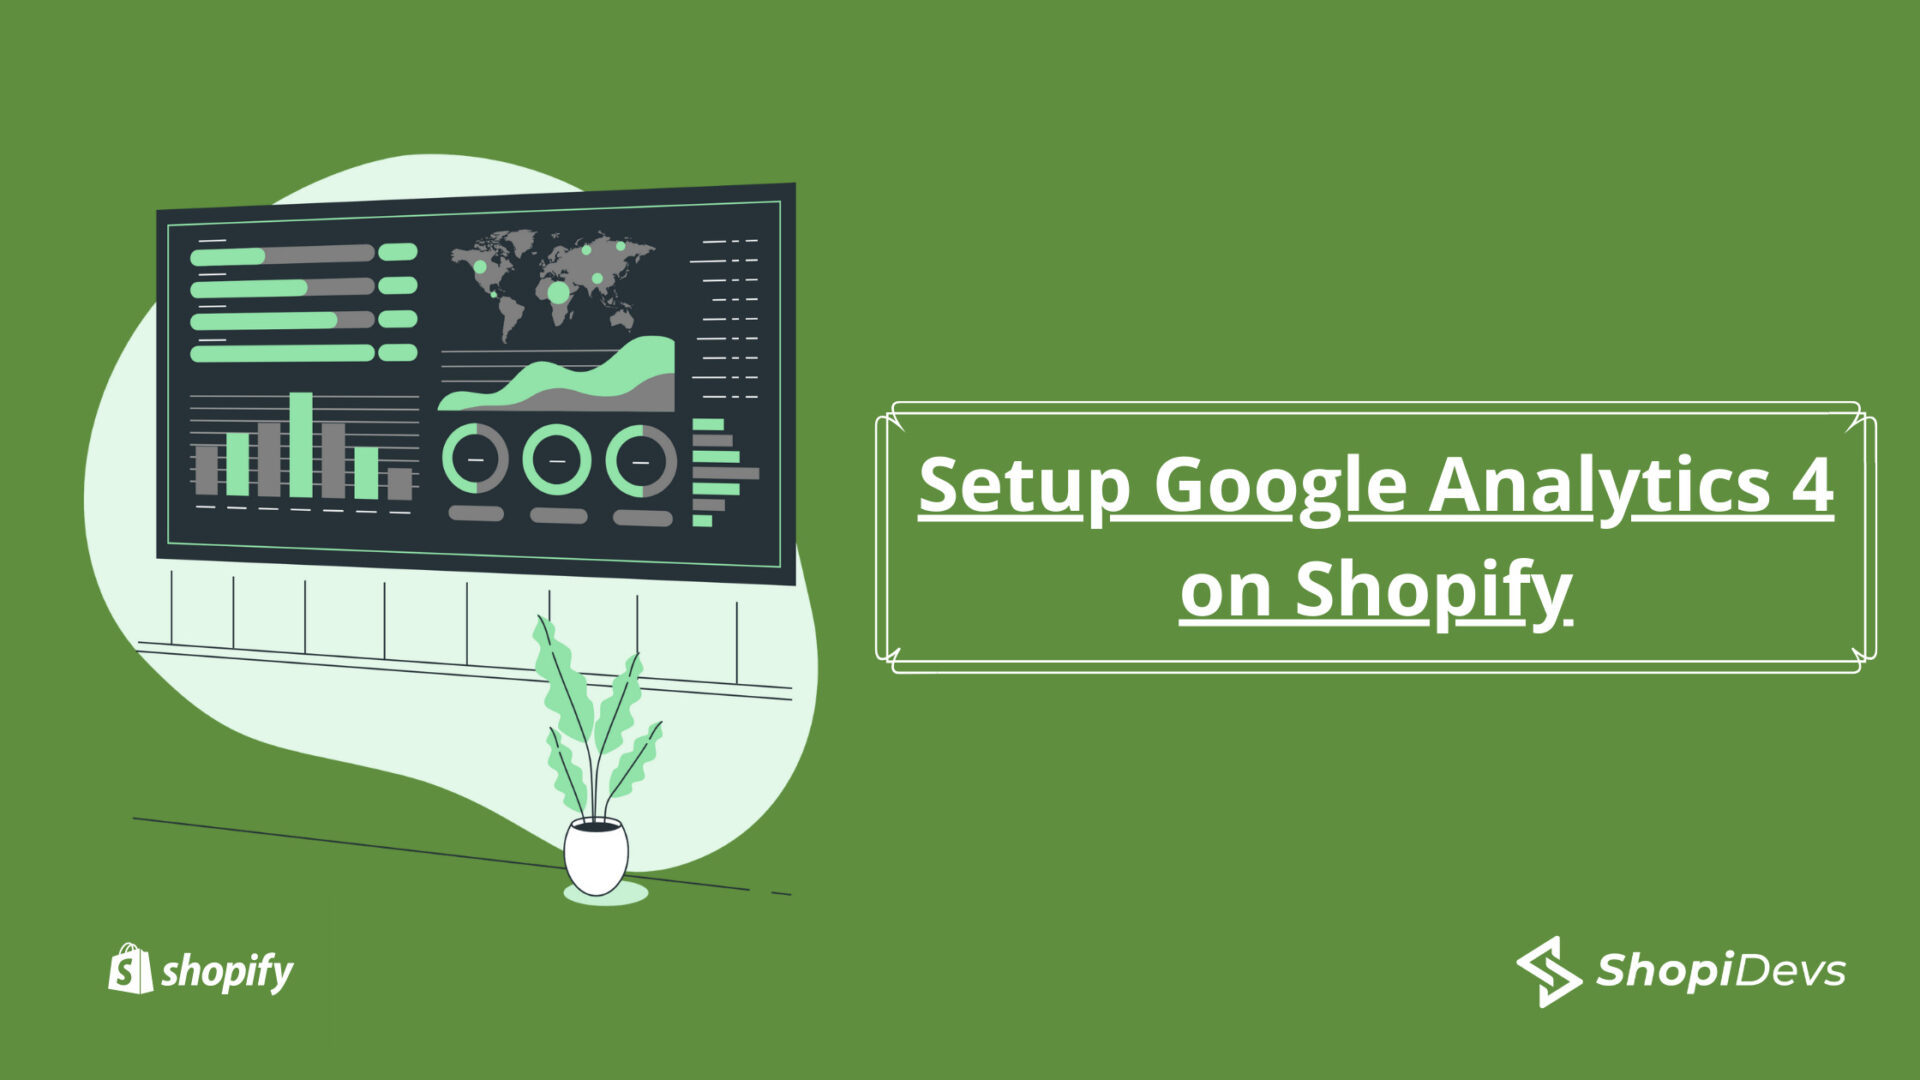 Setup Google Analytics 4 on Shopify